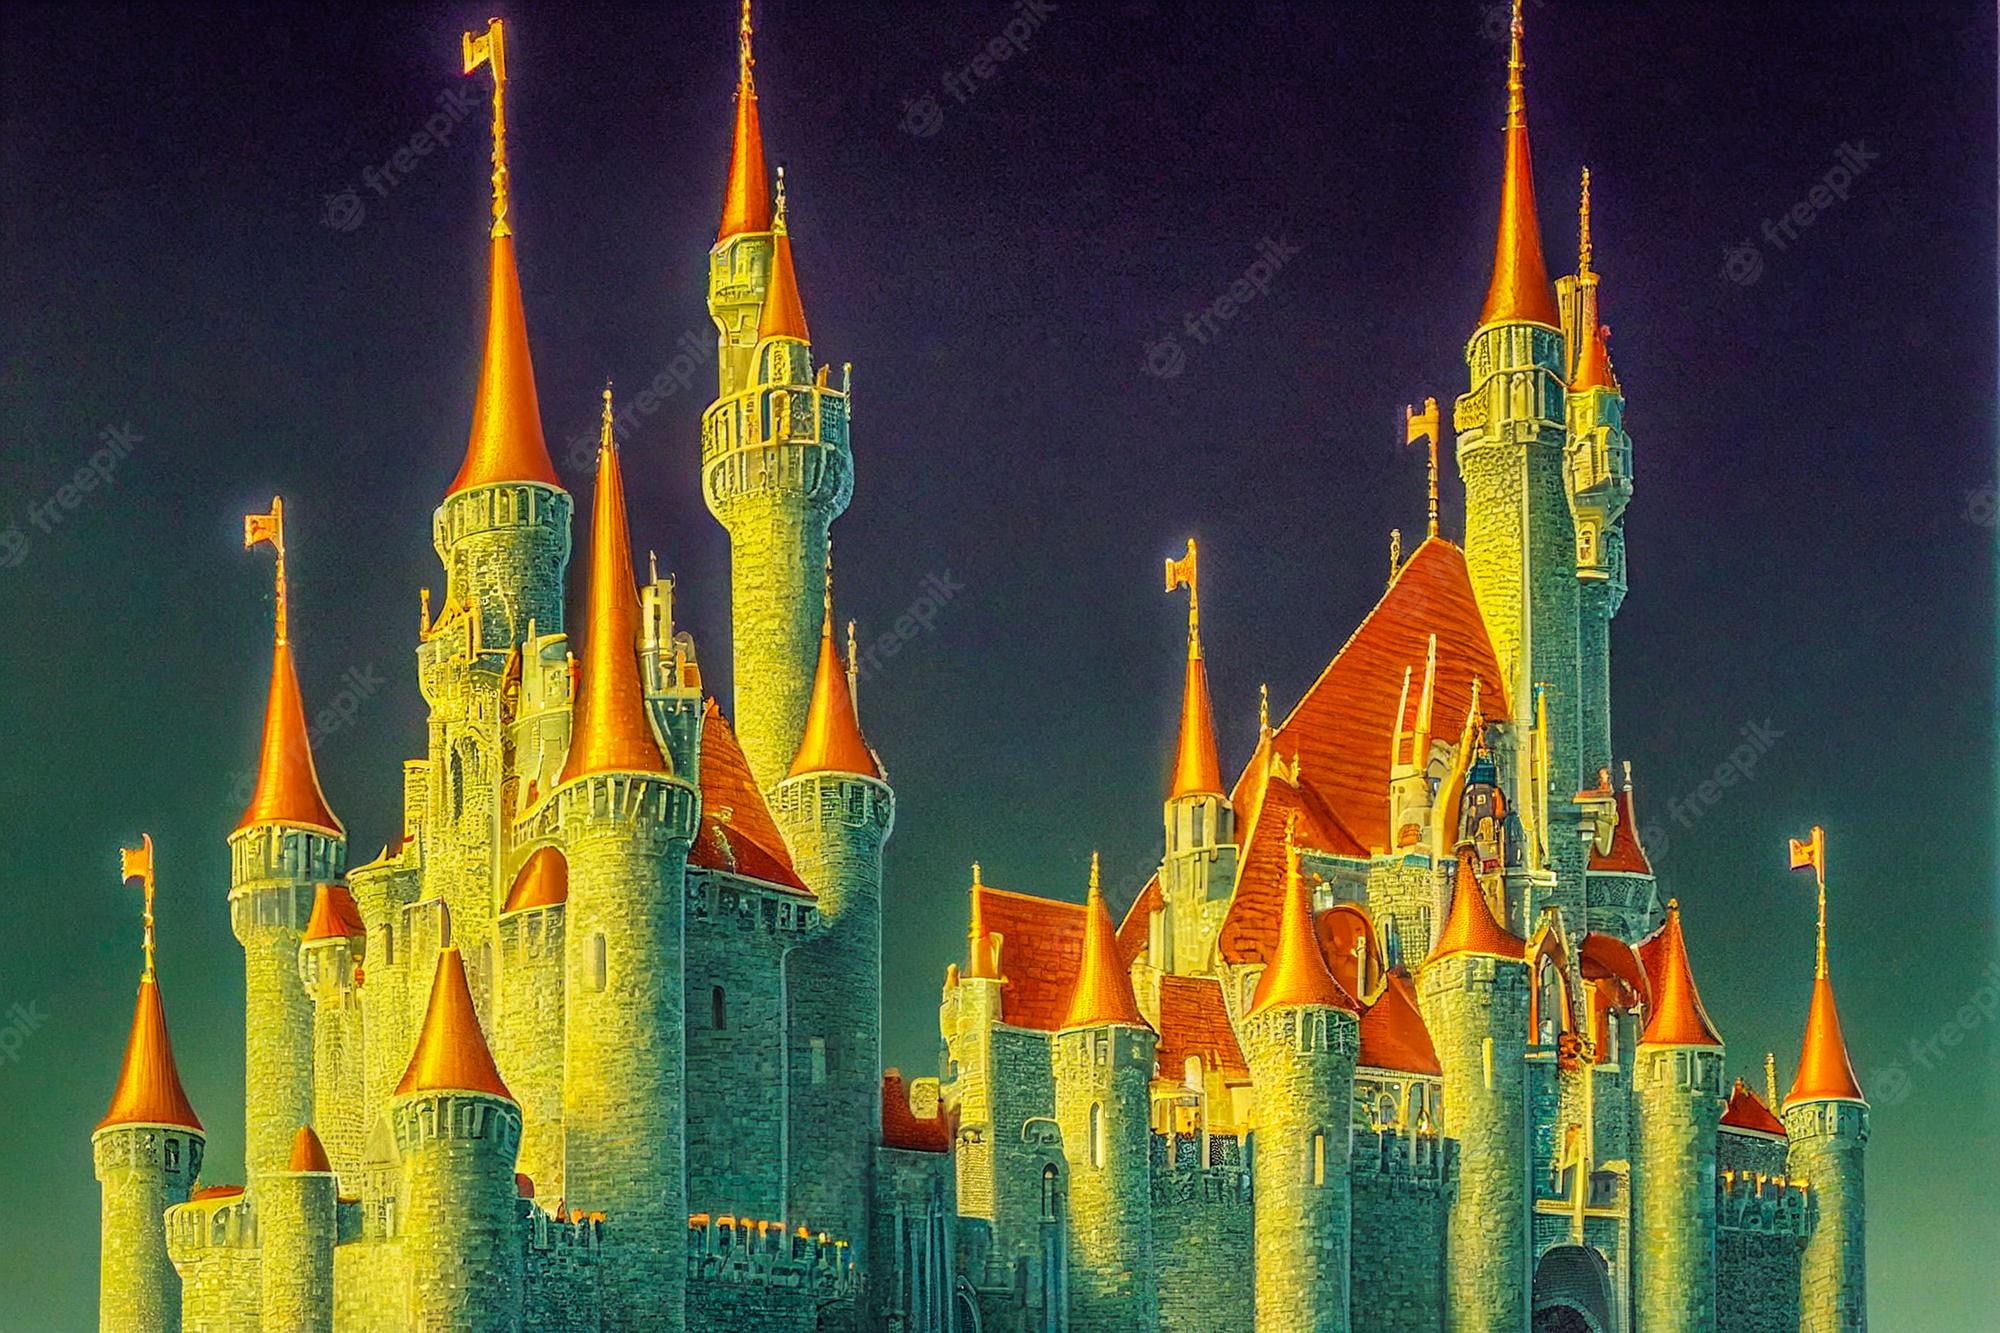 Fantasy Castle Art Wallpapers